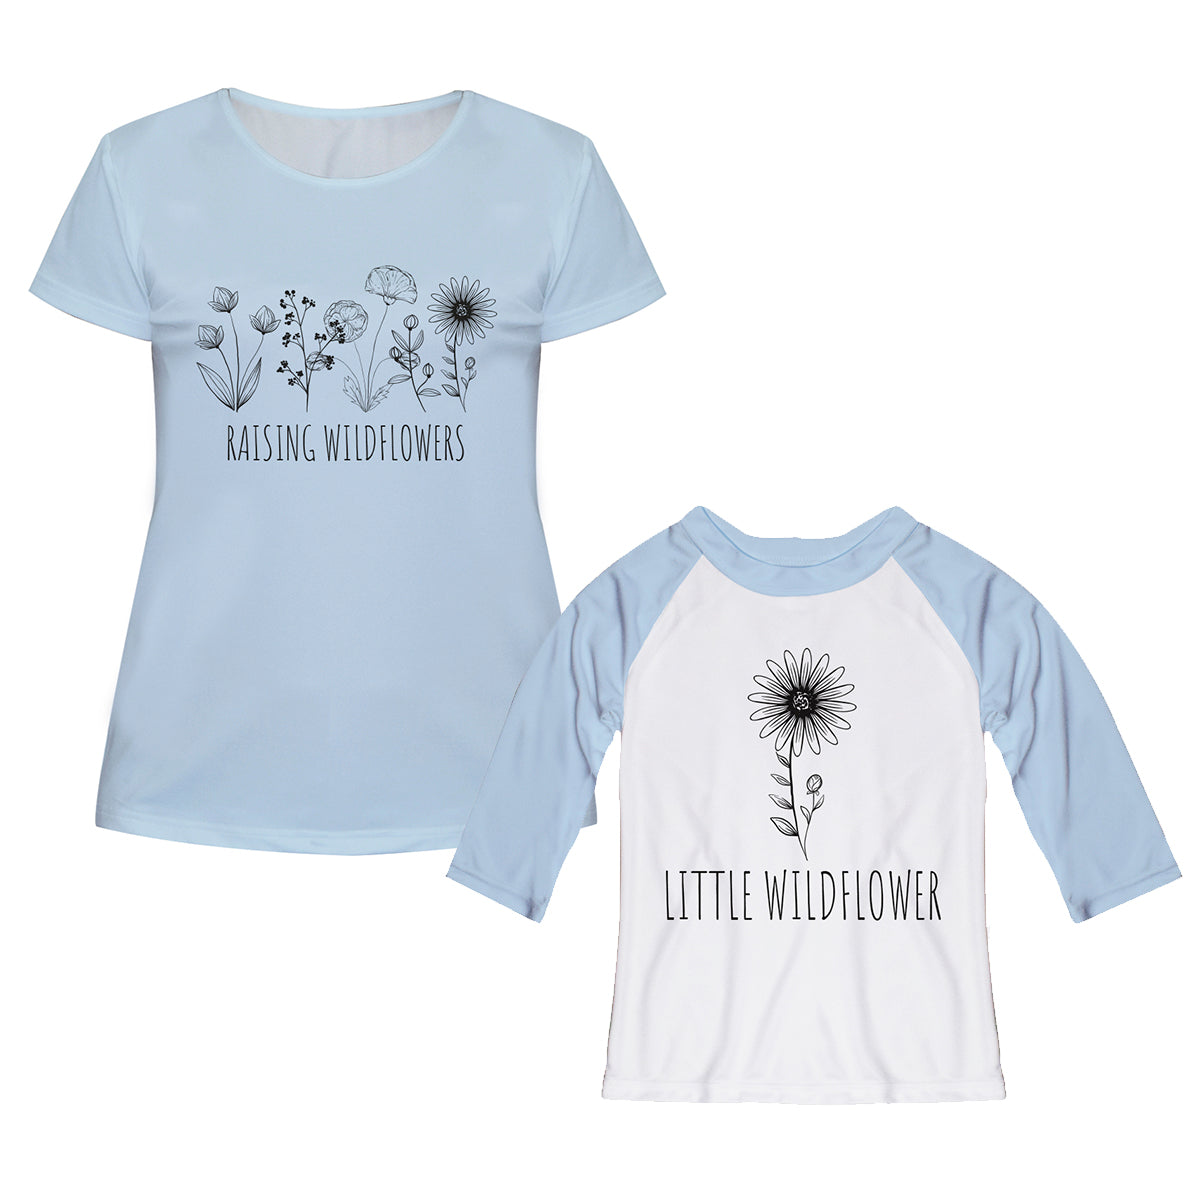 Little Wildflower Light Blue and White Raglan Tee Shirt 3/4 Sleeve - Wimziy&Co.